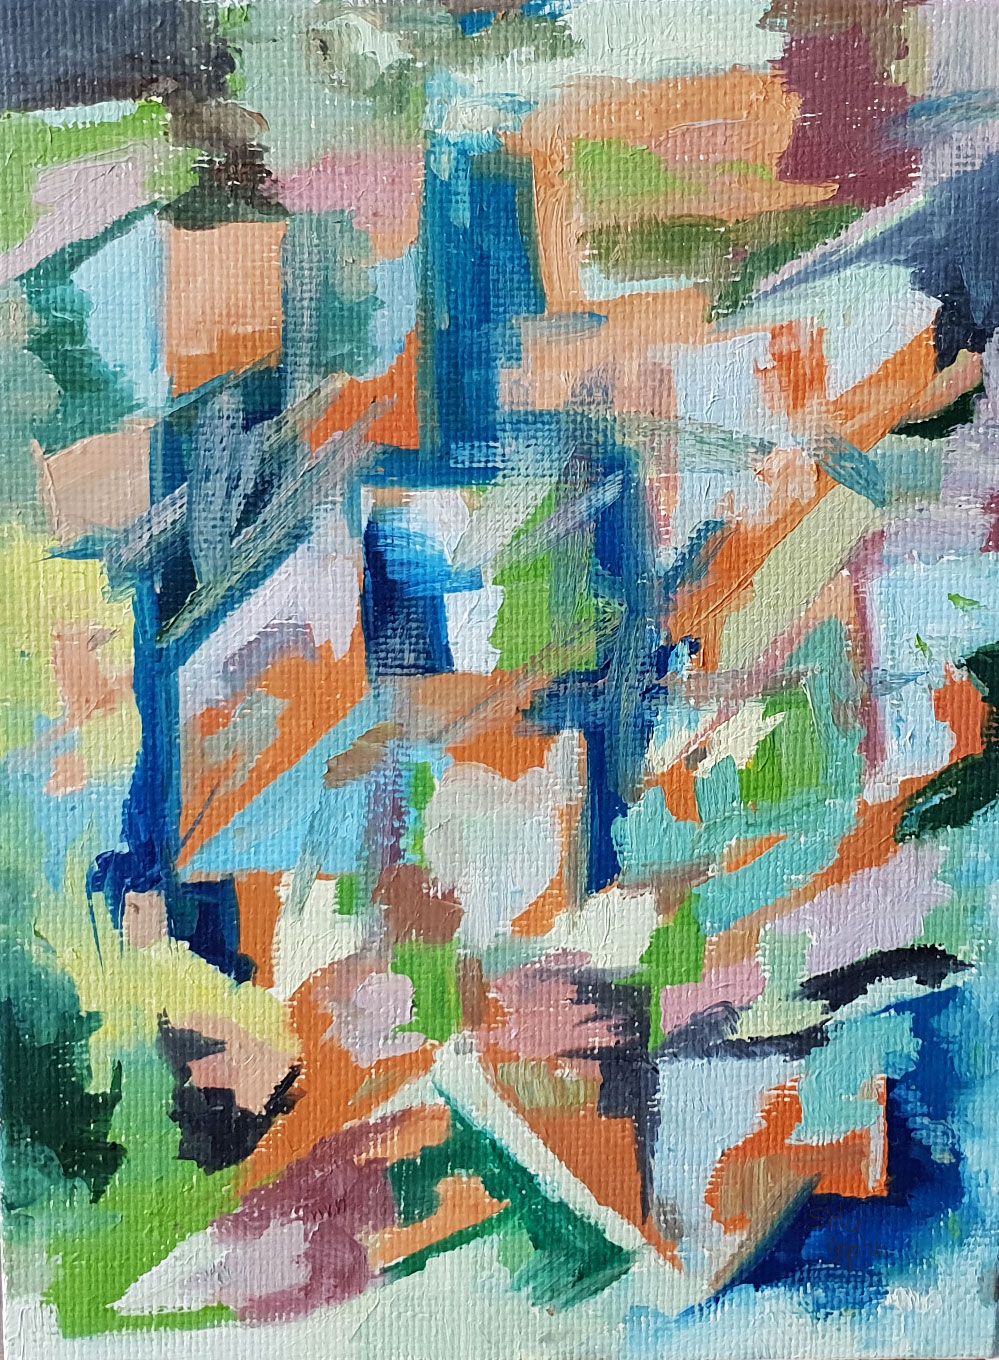 Abstractsia (2017)